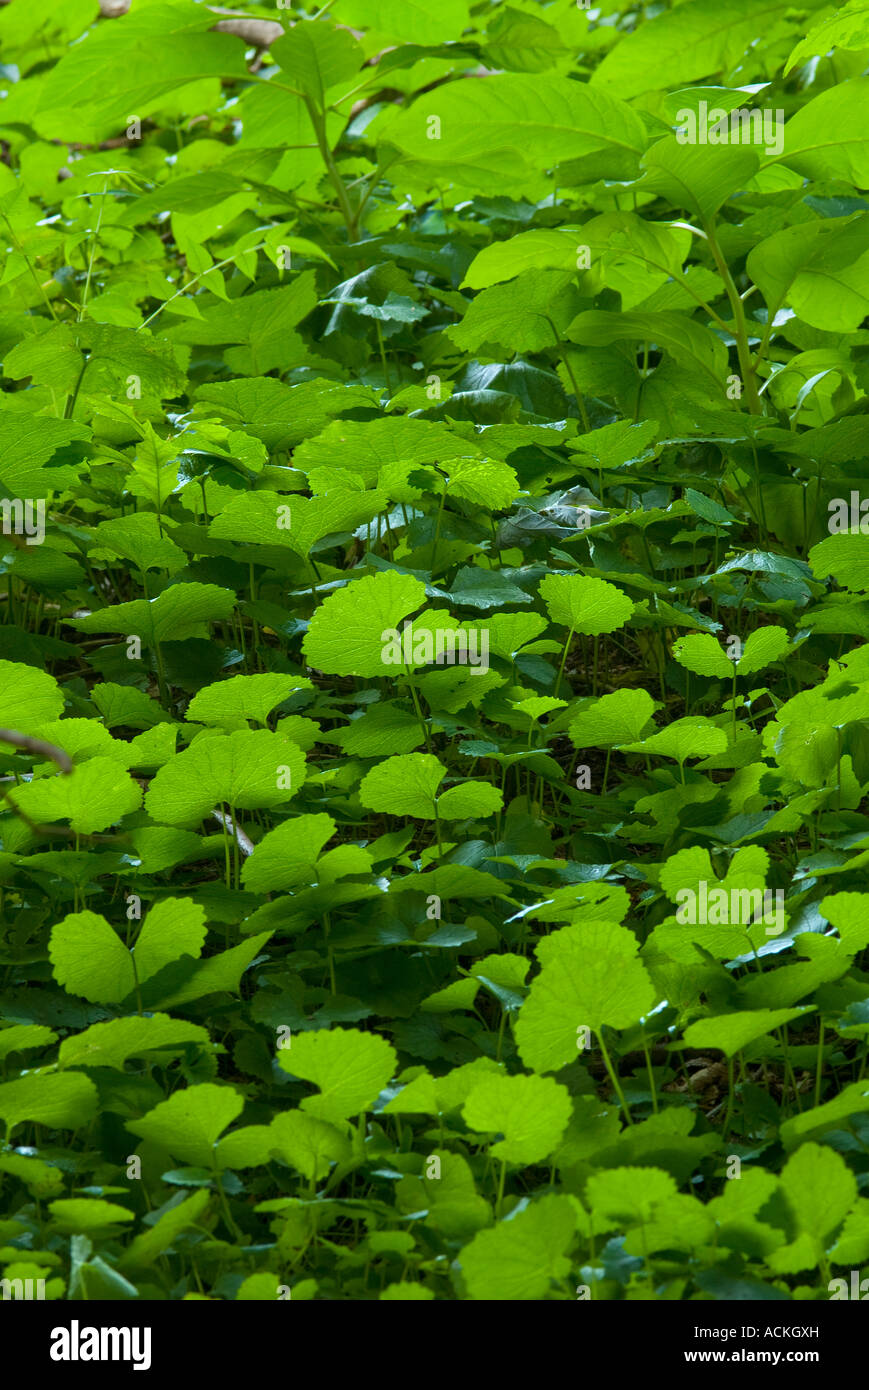 Grünen Rasen Unkraut Blätter Pflanzen im Garten Stockfoto